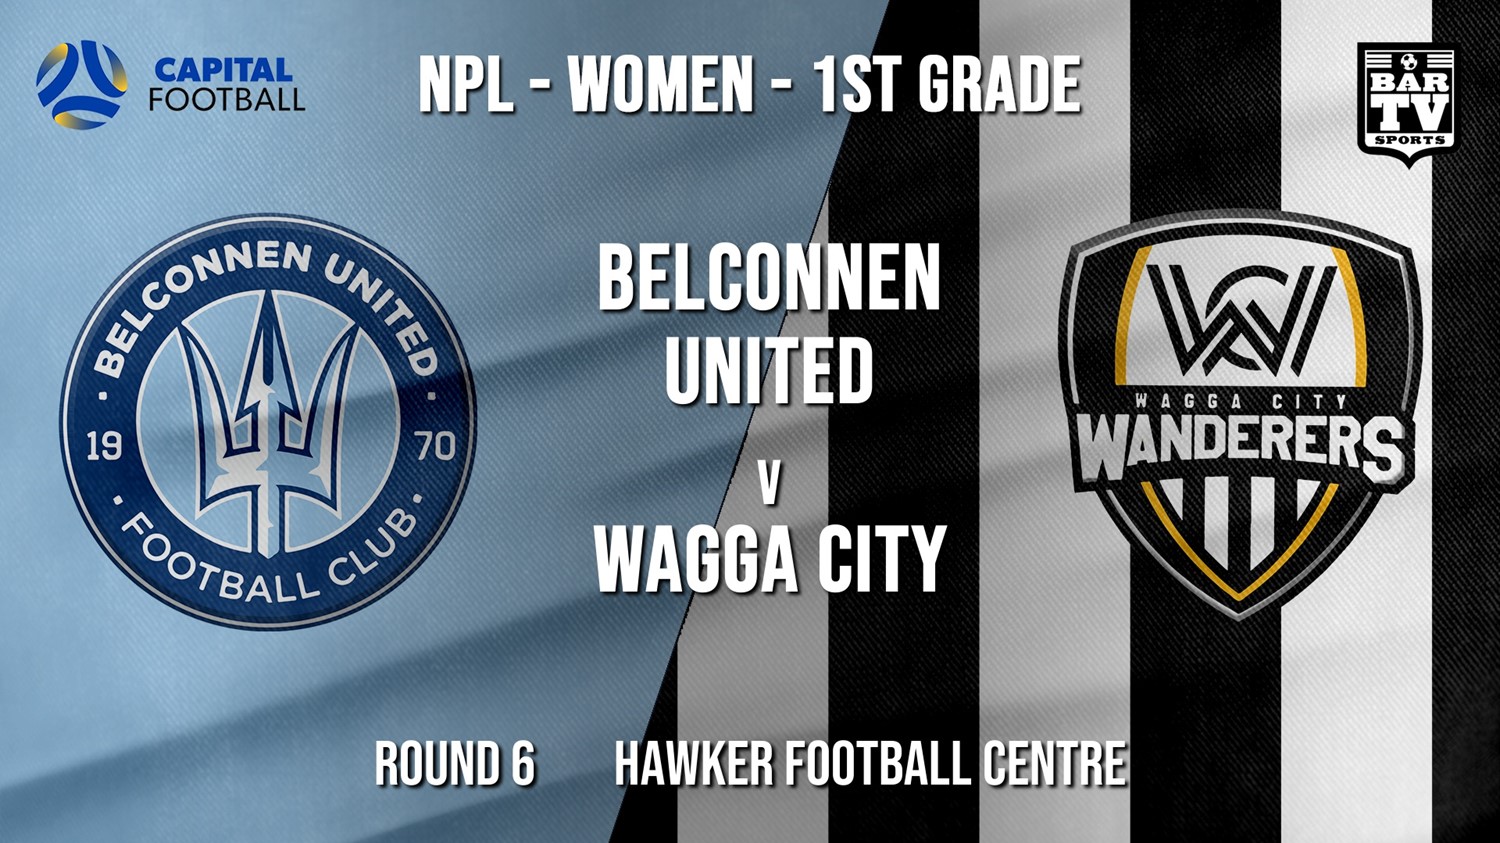 NPLW - Capital Round 6 - Belconnen United (women) v Wagga City Wanderers FC (women) Minigame Slate Image